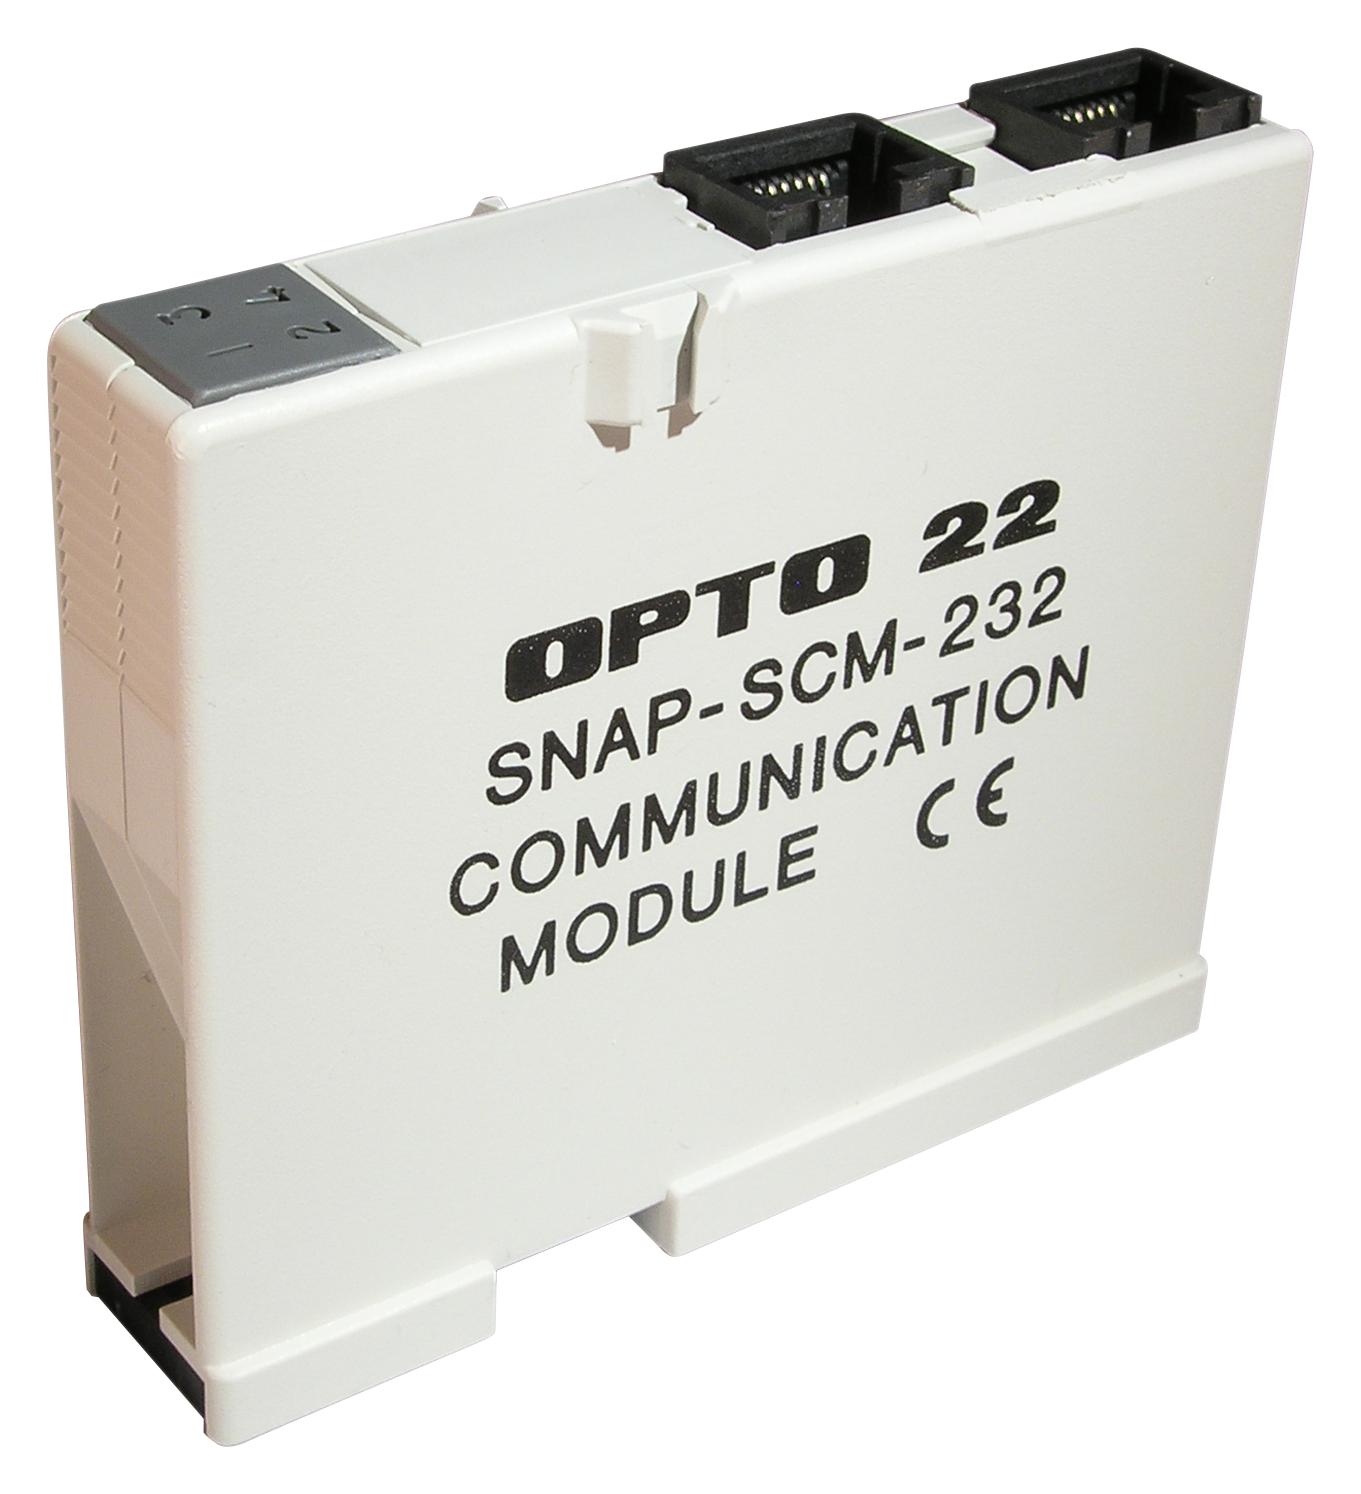 SNAPSCM232 COMMUNICATION MODULE, RS232, 2-CH OPTO 22